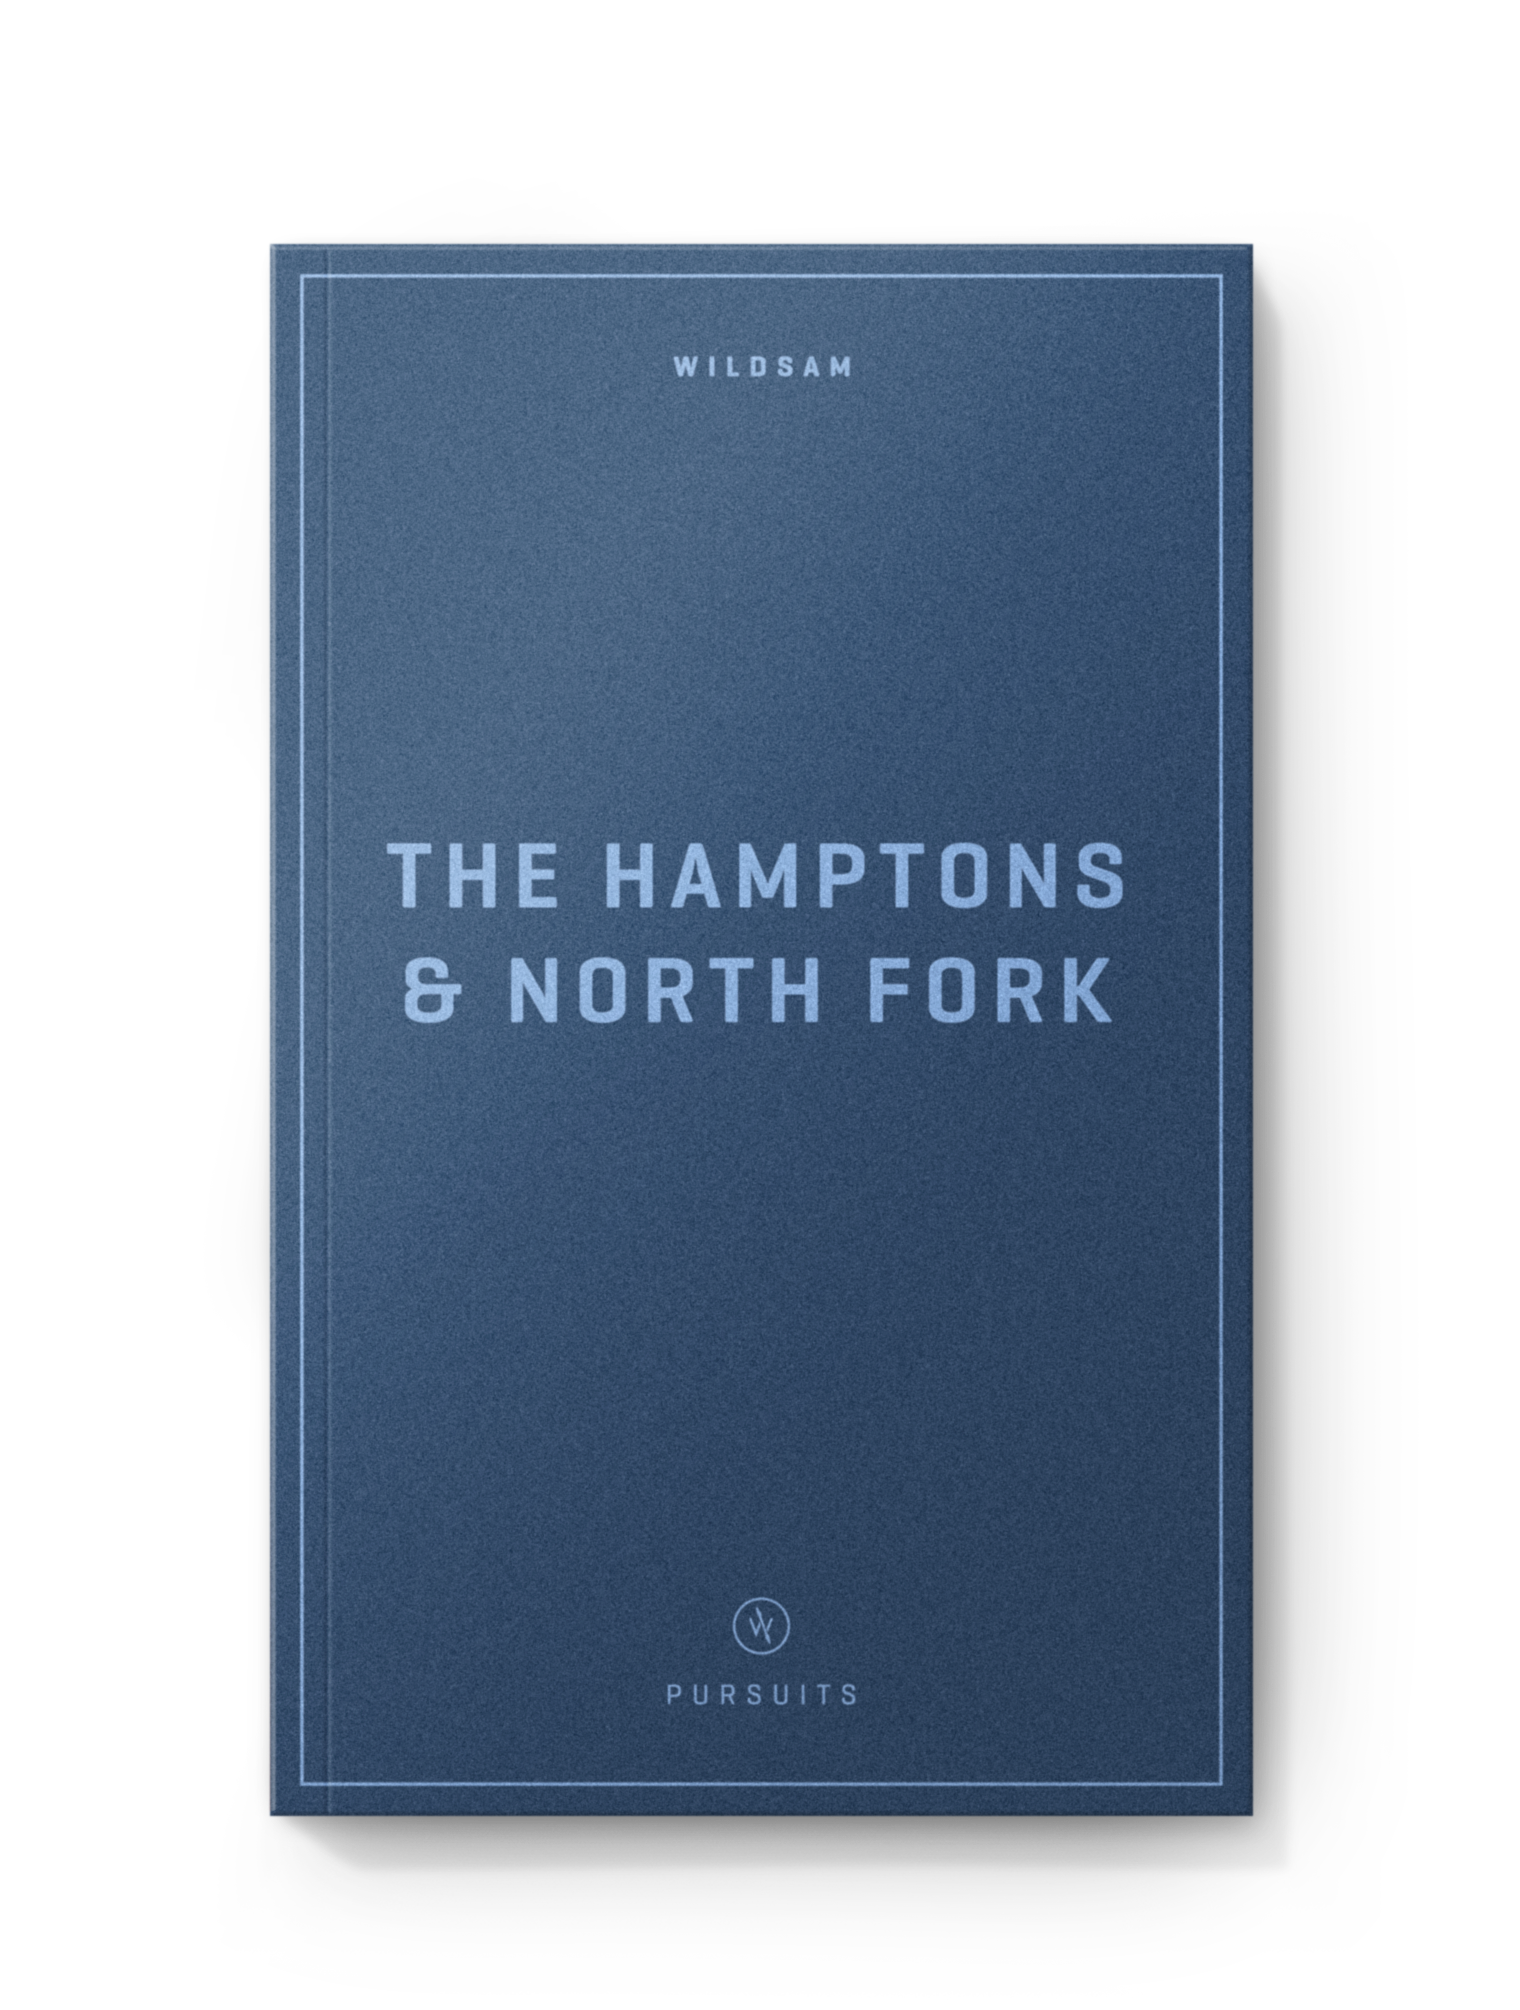 THE HAMPTONS & NORTH FORK